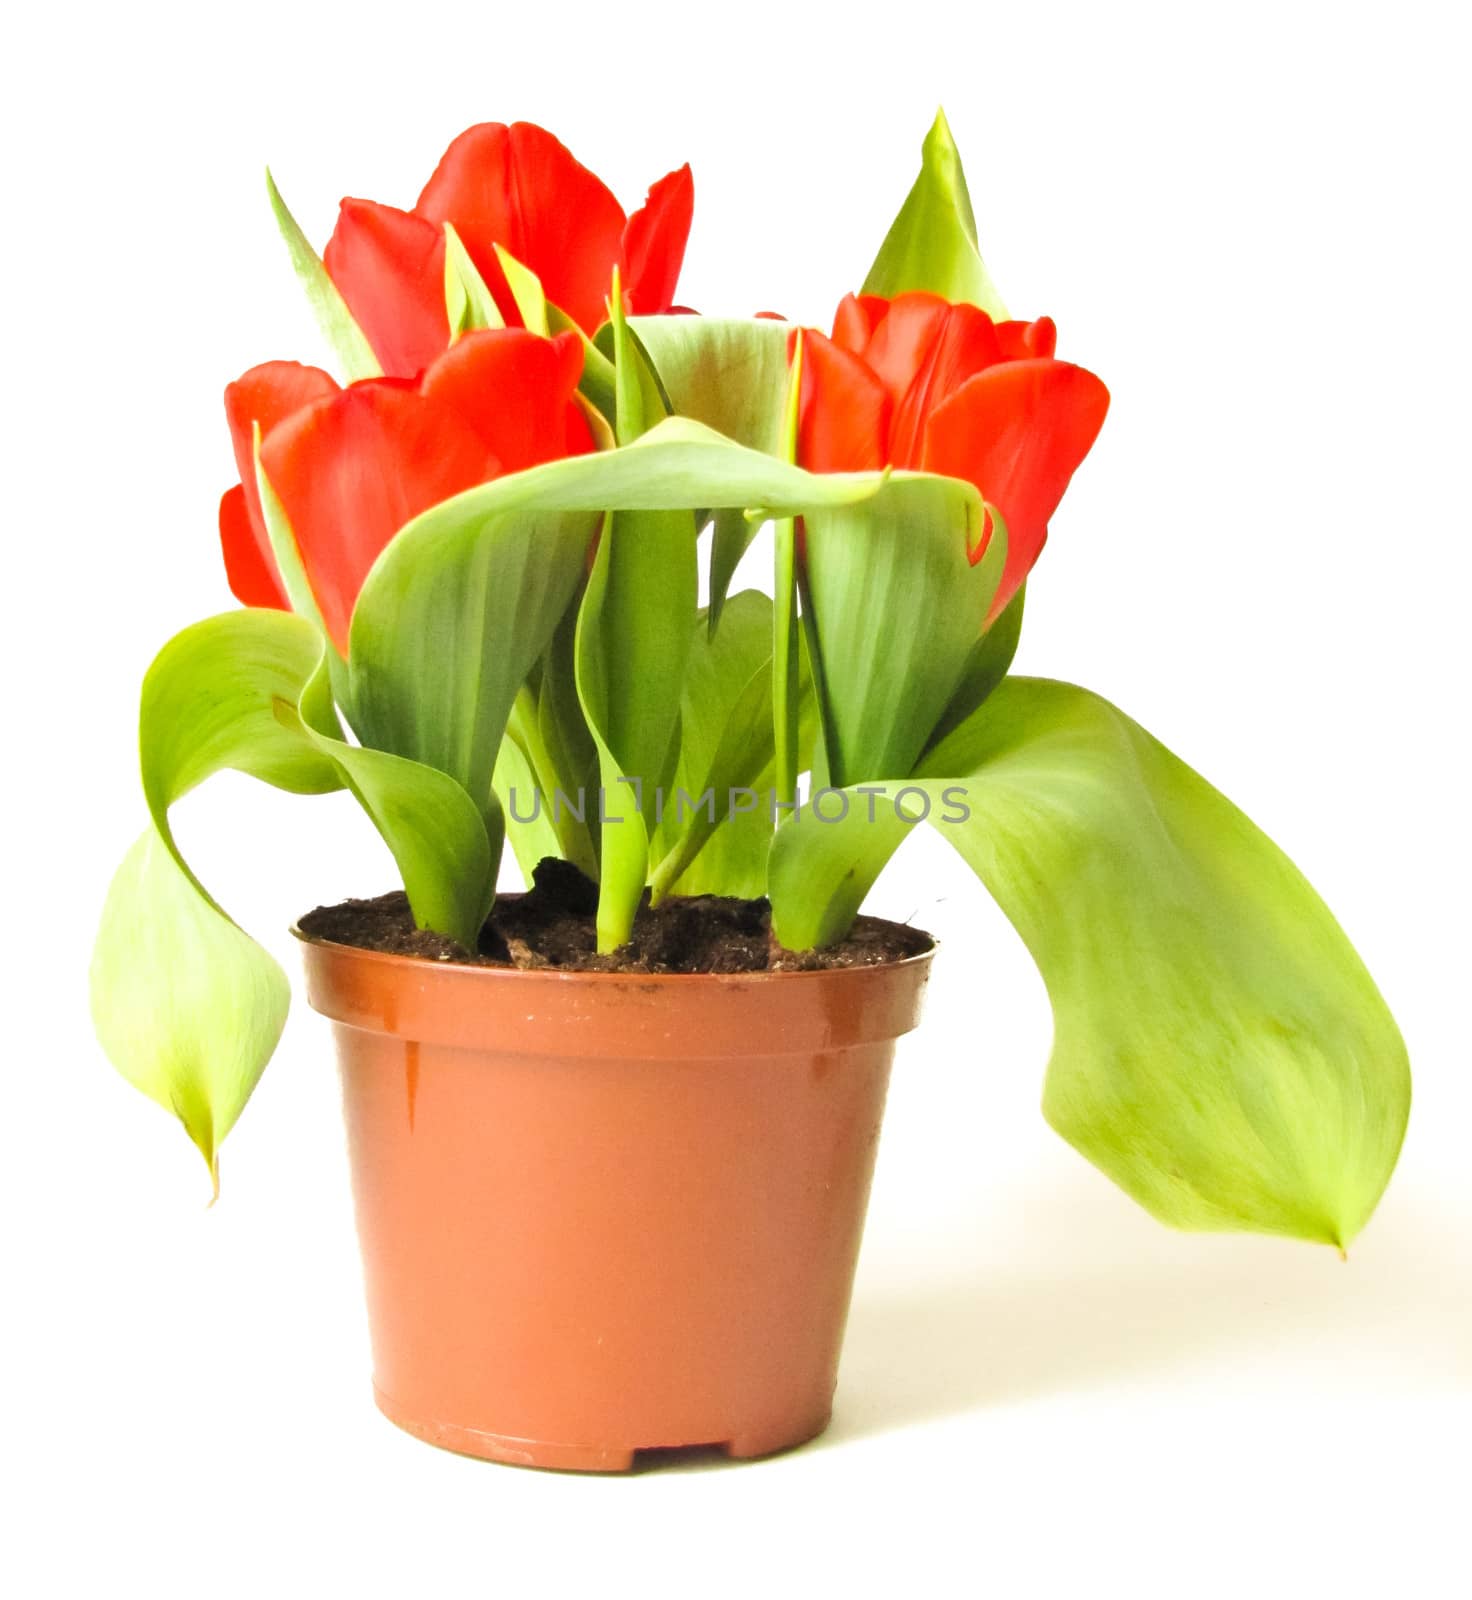 Red tulips by rodakm